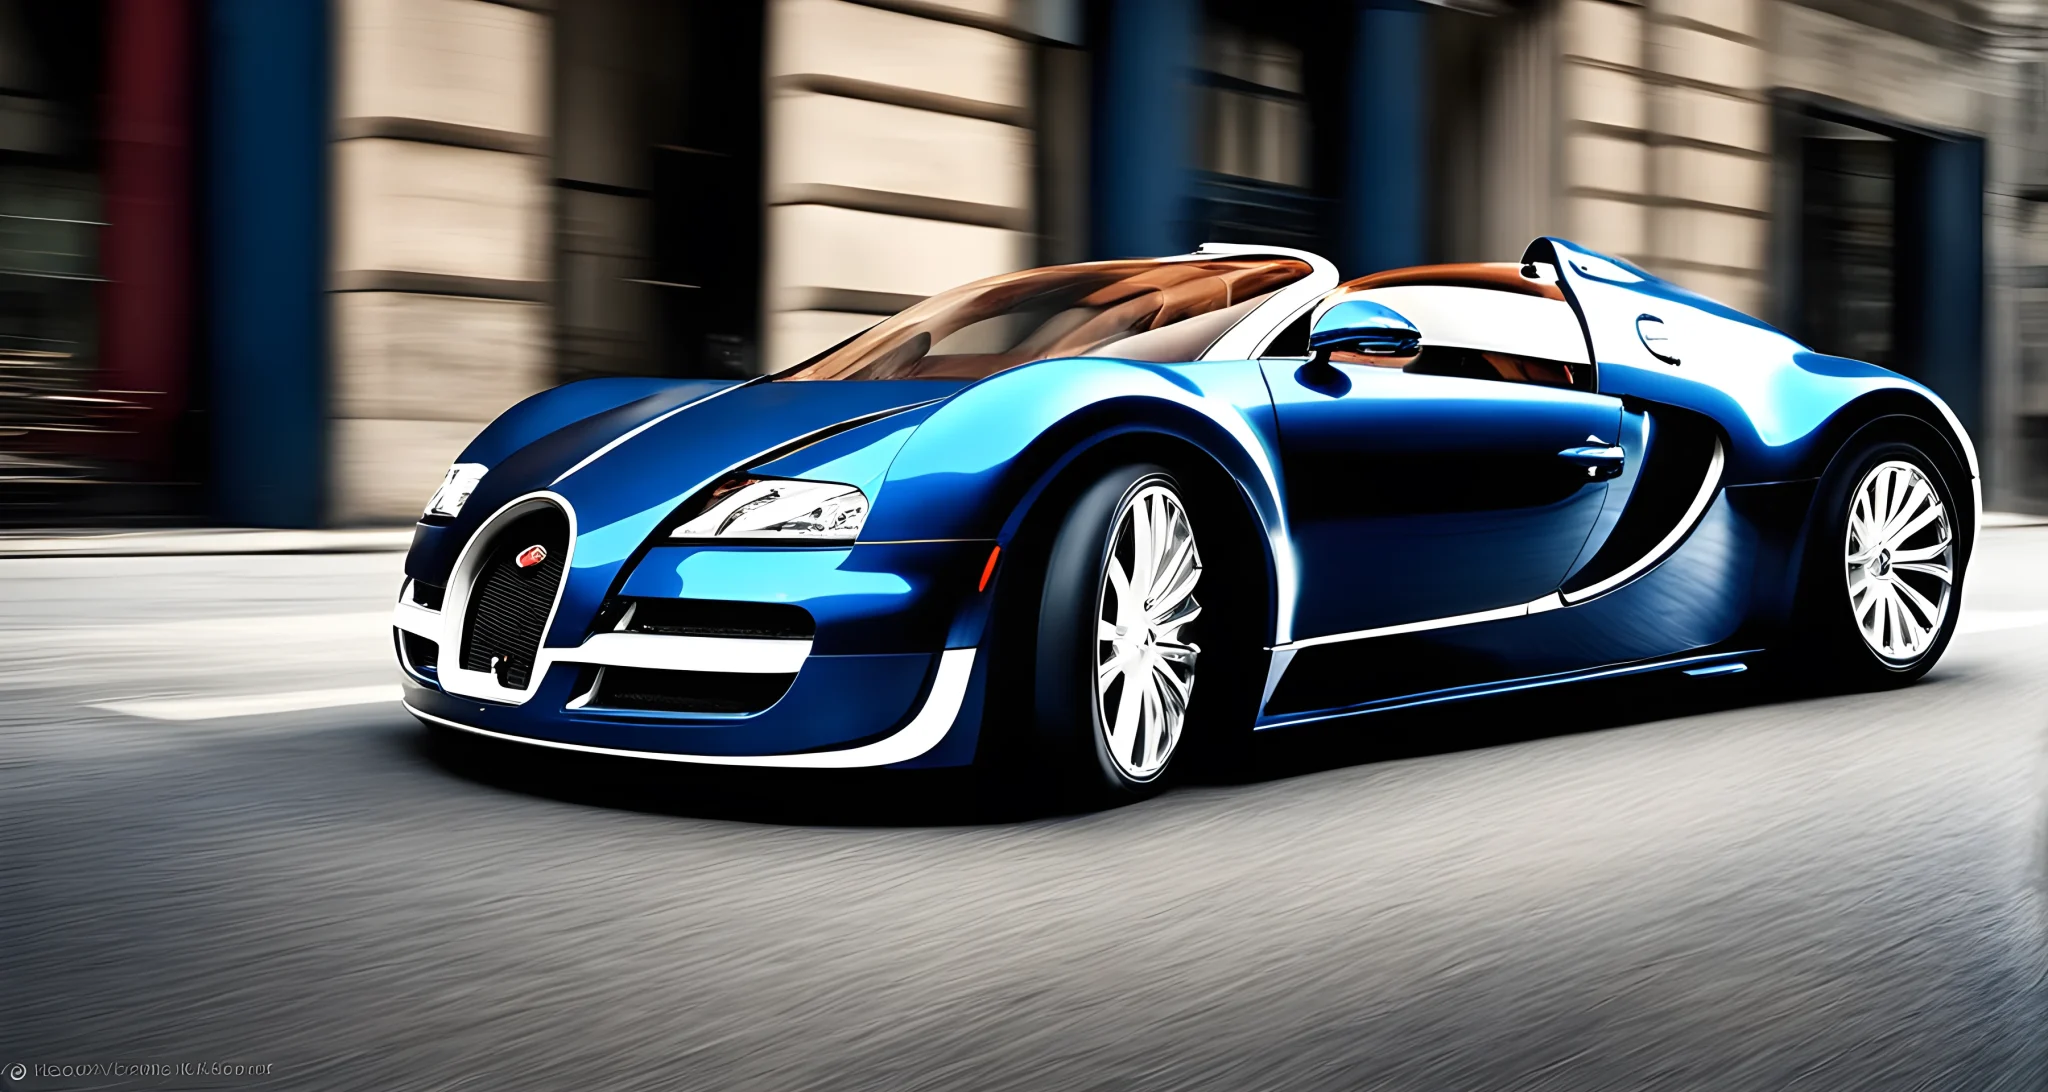 The image showcases a Bugatti Veyron with a sleek, aerodynamic design, and high-performance wheels.